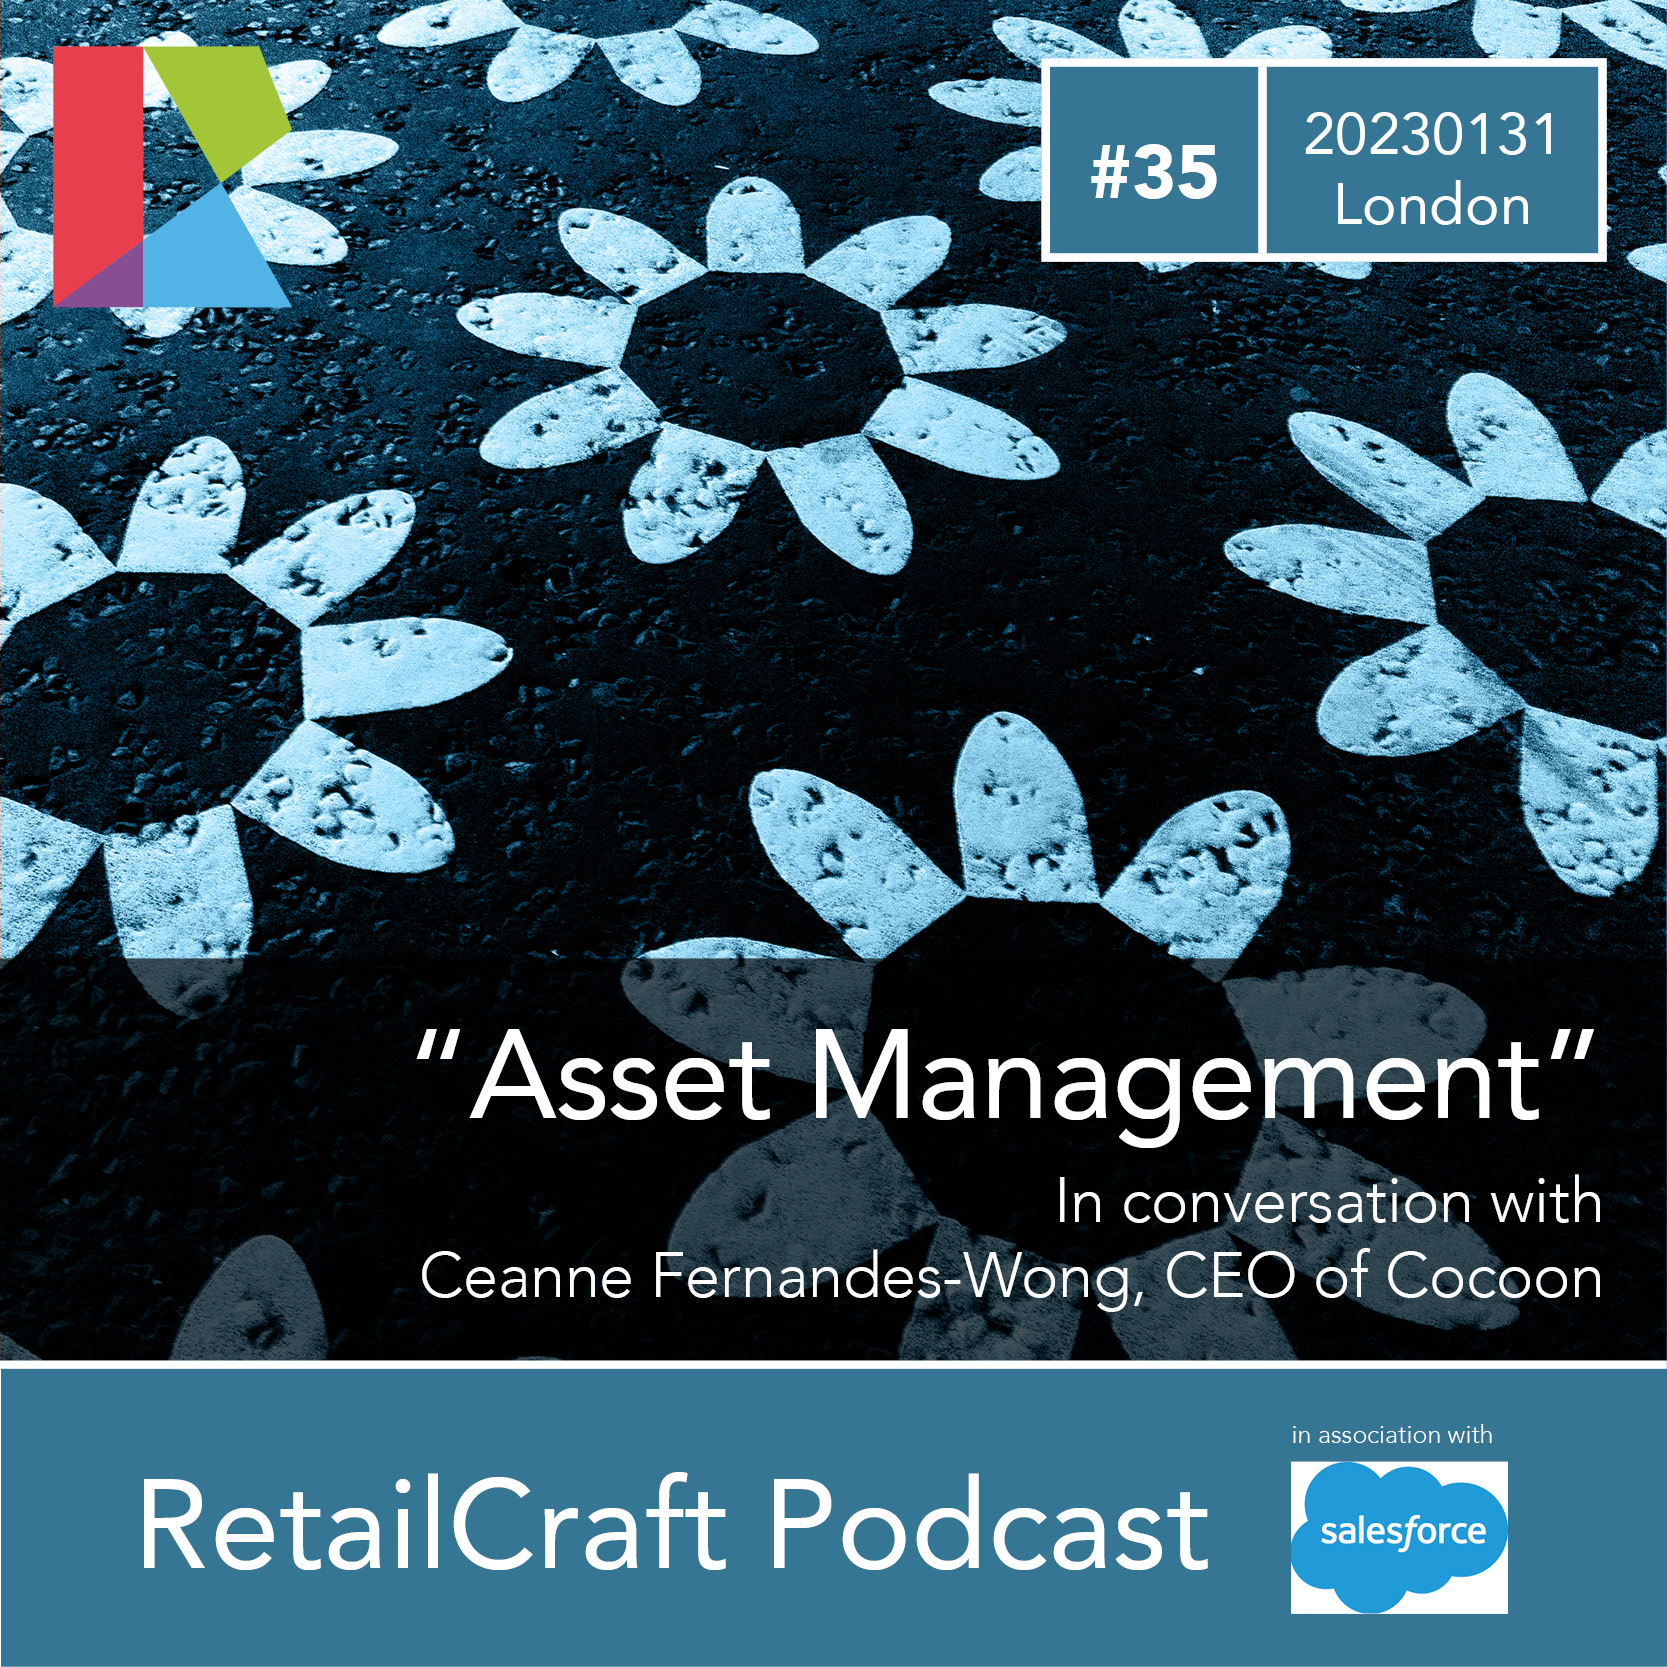 RetailCraft Podcast #35 – “Asset Management” – Ceanne Fernandes-Wong of Cocoon